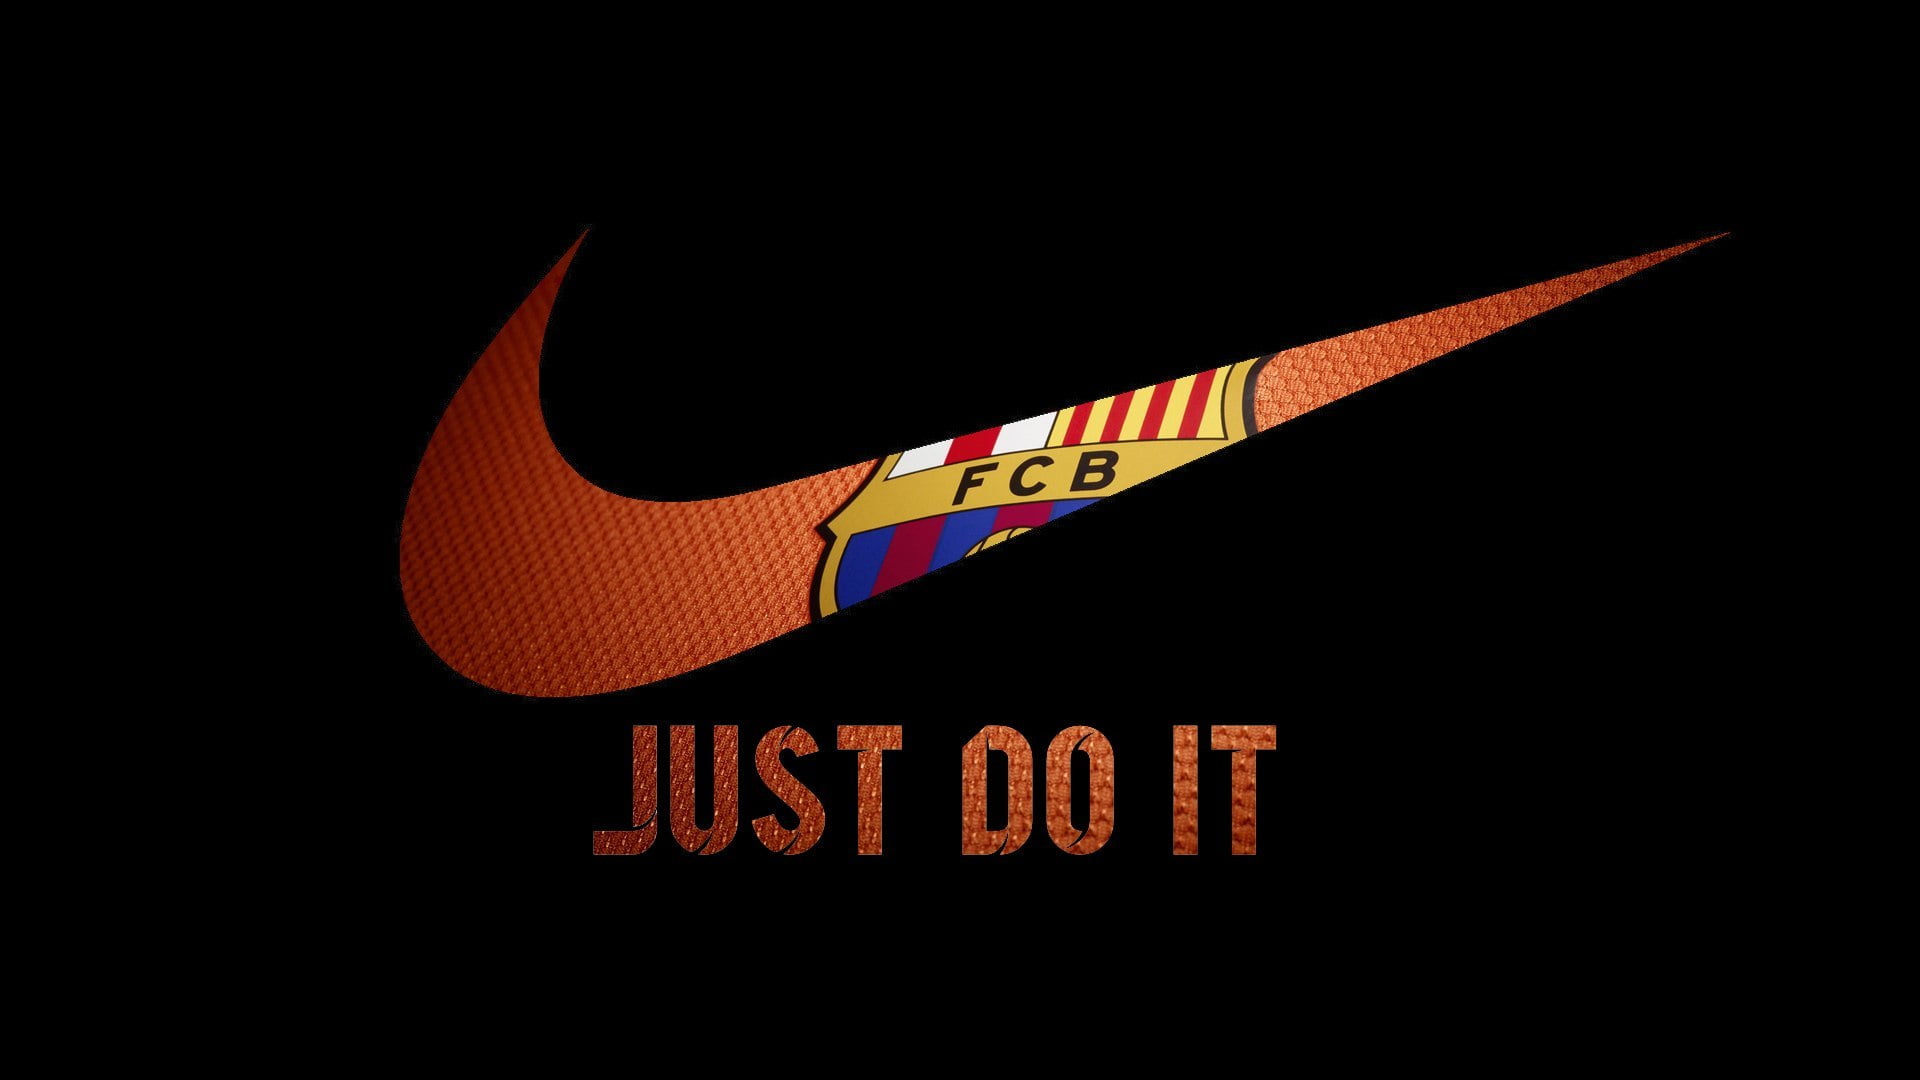 Football Club Barcelona Nike logo, FC Barcelona, Just do it, vector